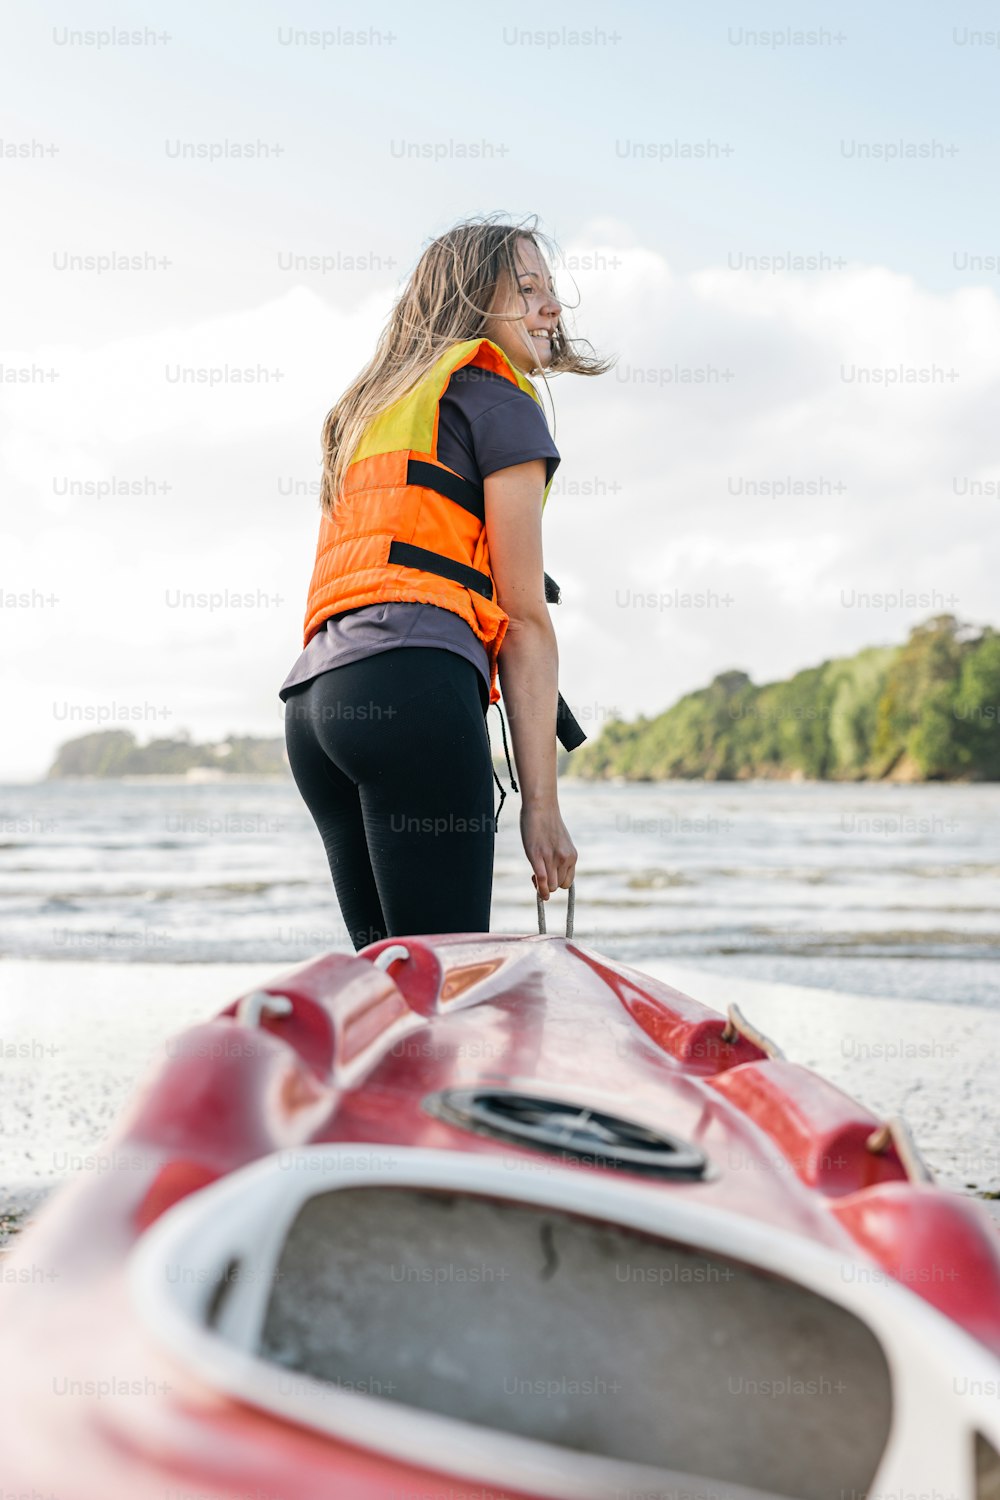 Una donna in piedi accanto a un kayak rosso su una spiaggia